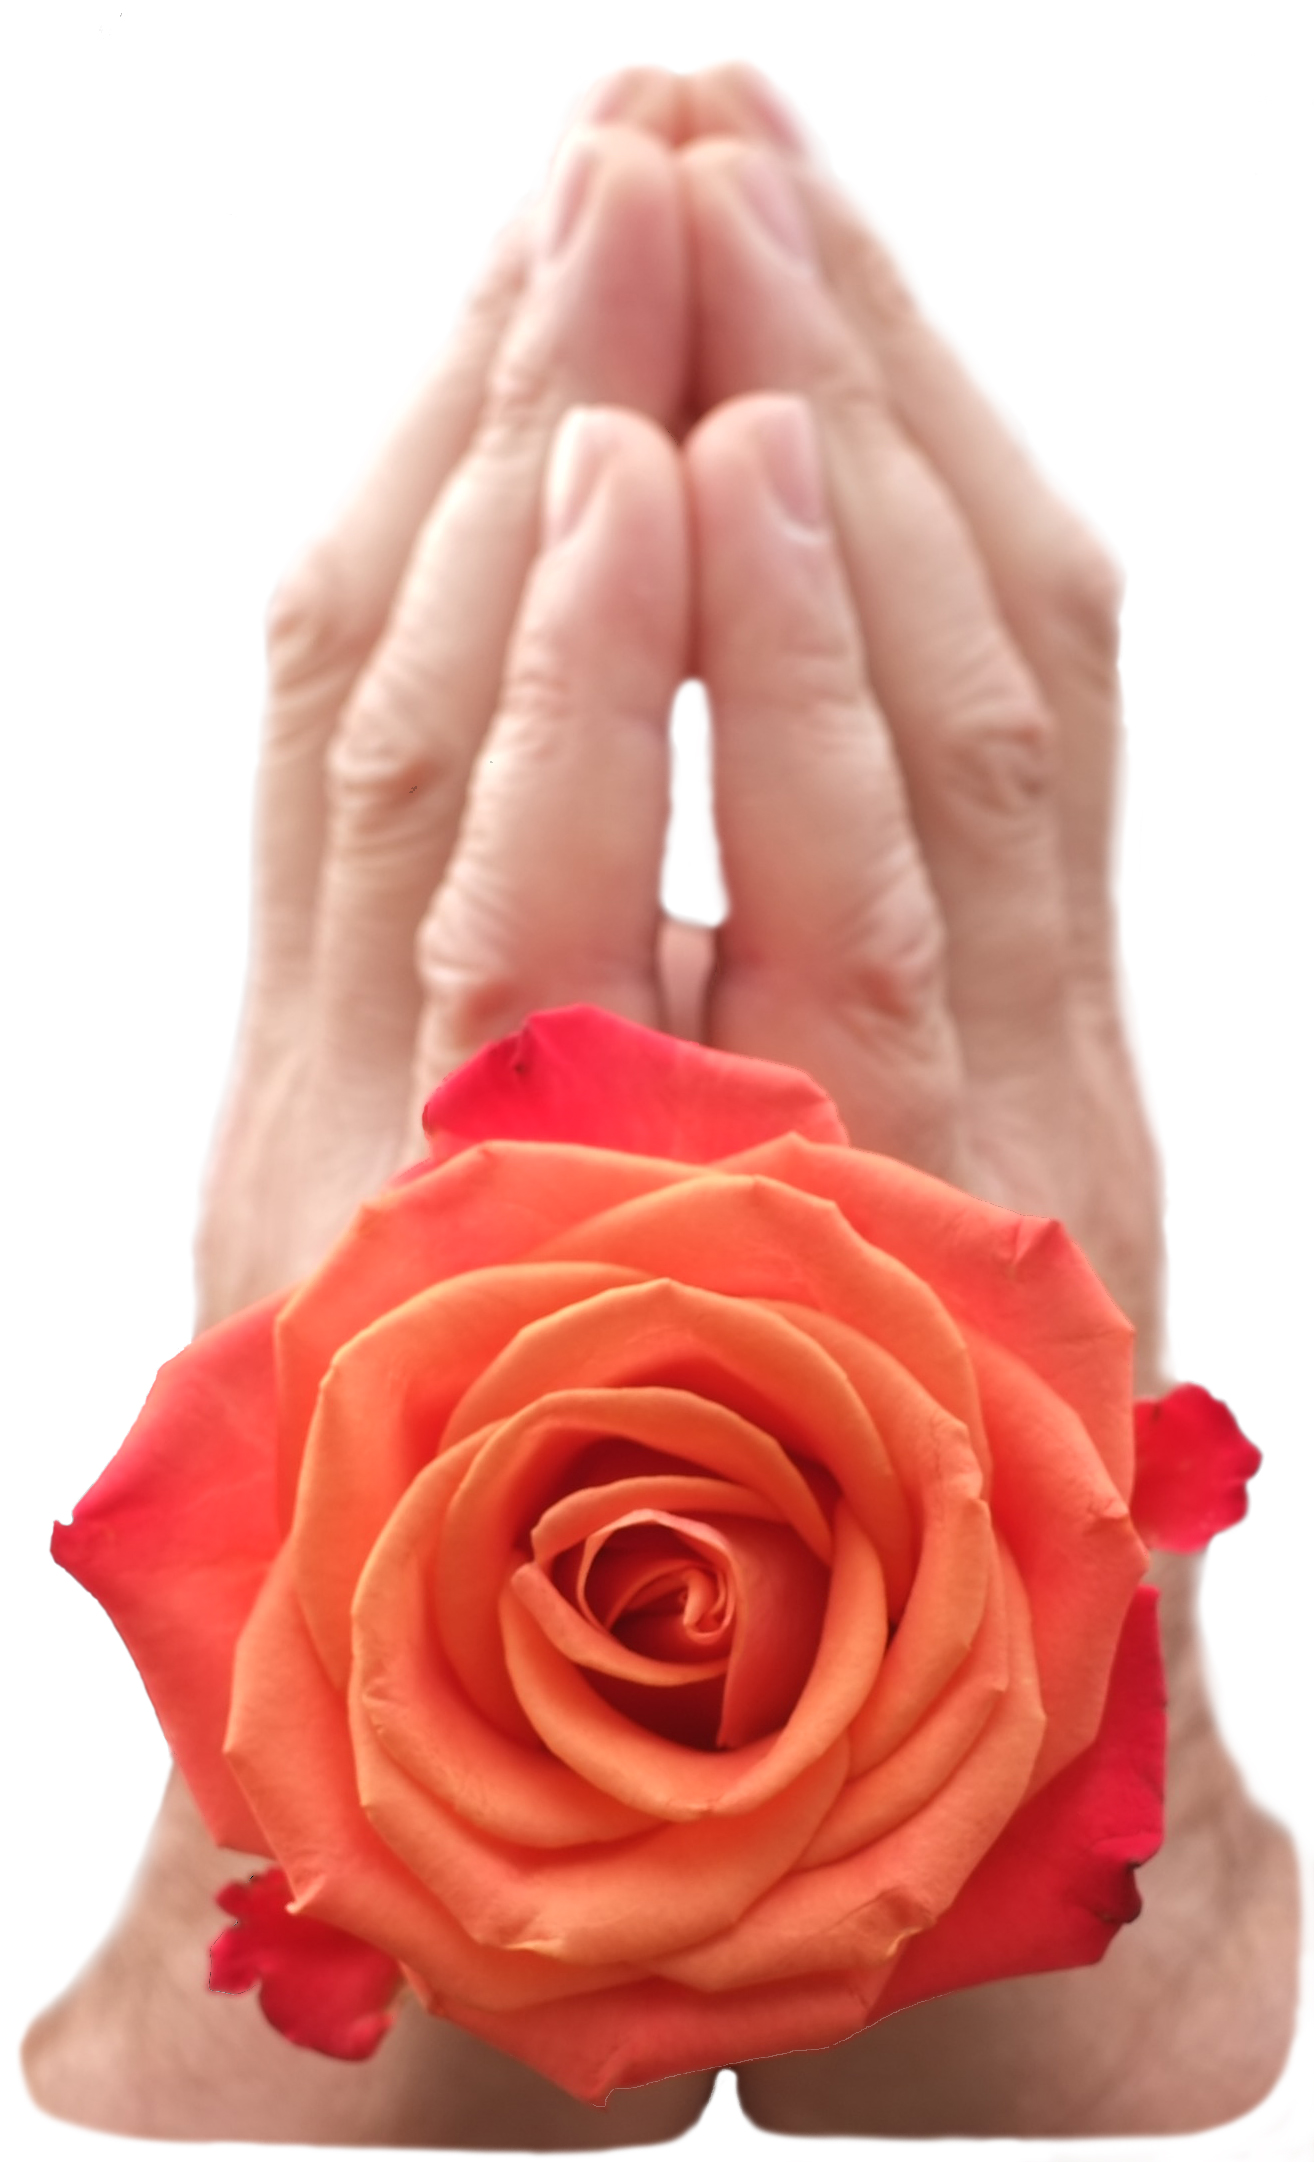 Hands in prayer with flower